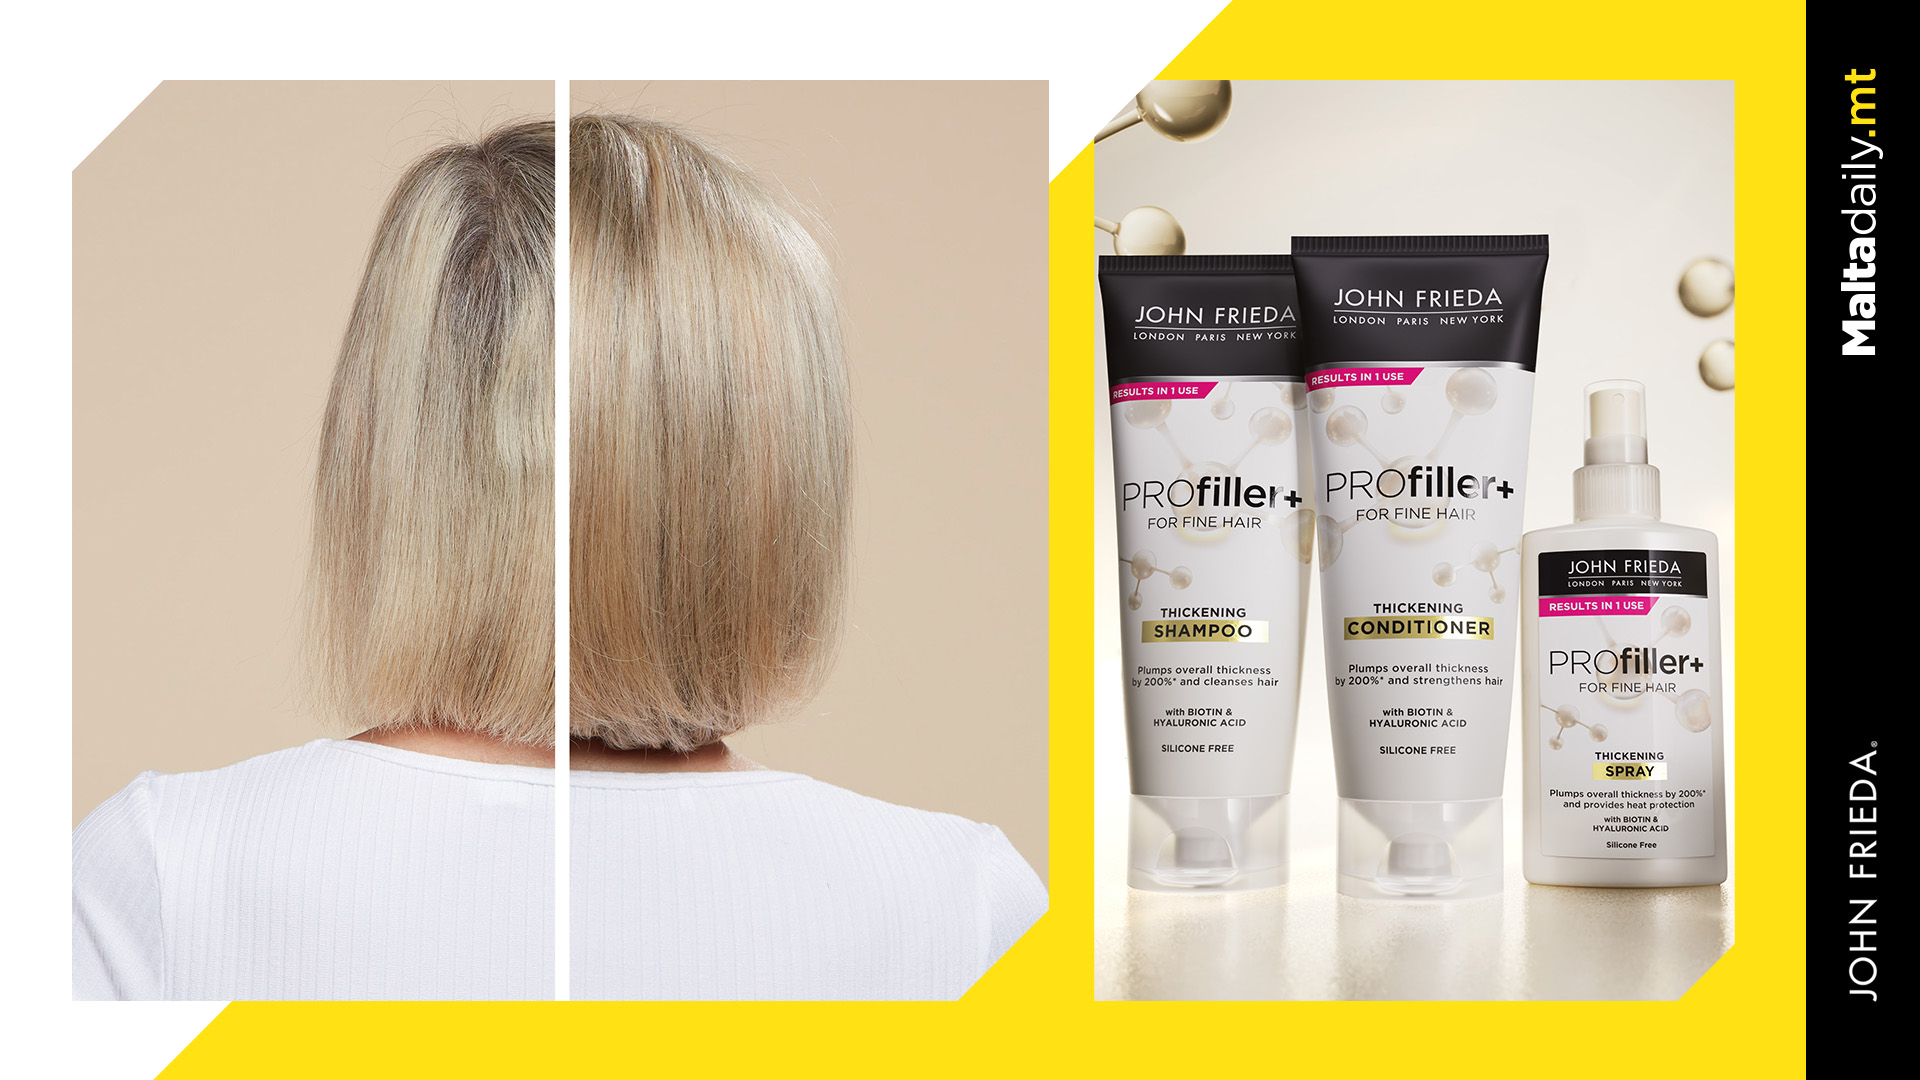 John Frieda launch new PROFiller+ line aimed at thickening hair